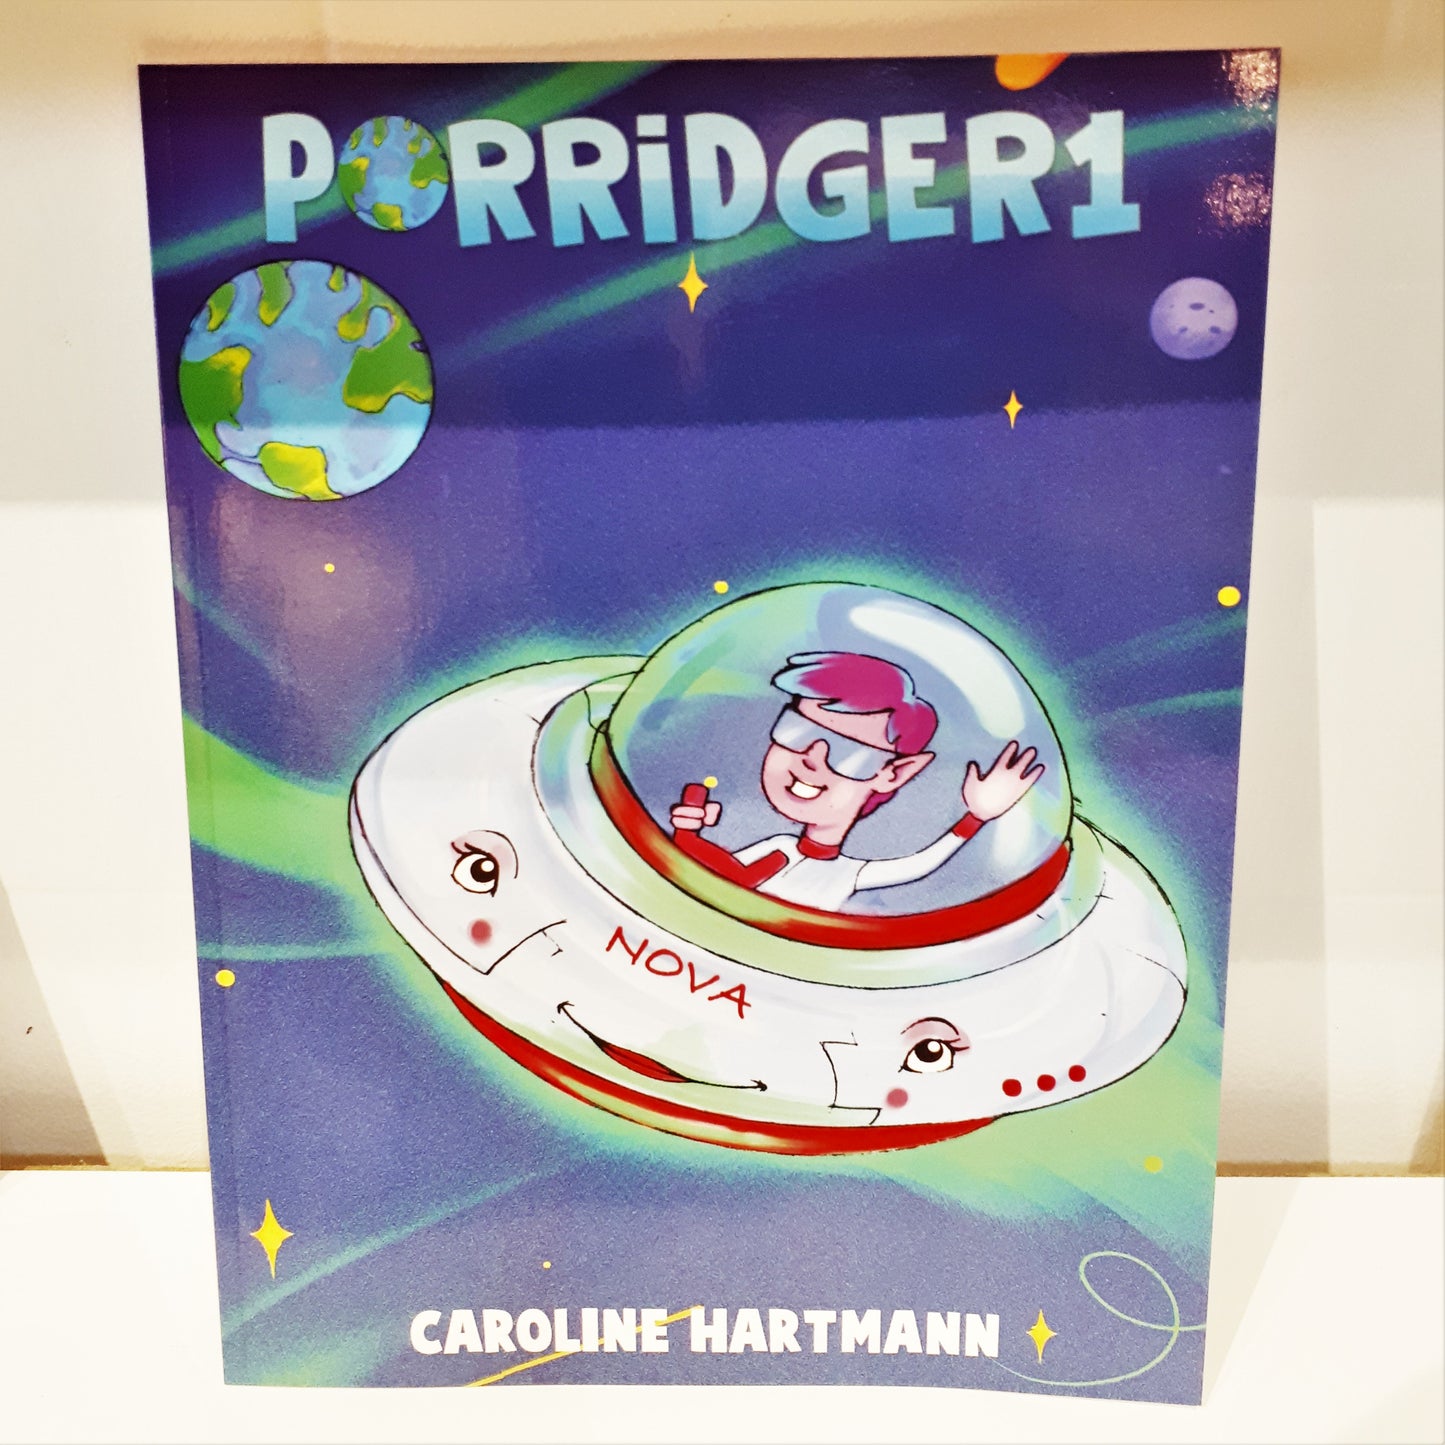 Porridger1 by Caroline Hartmann